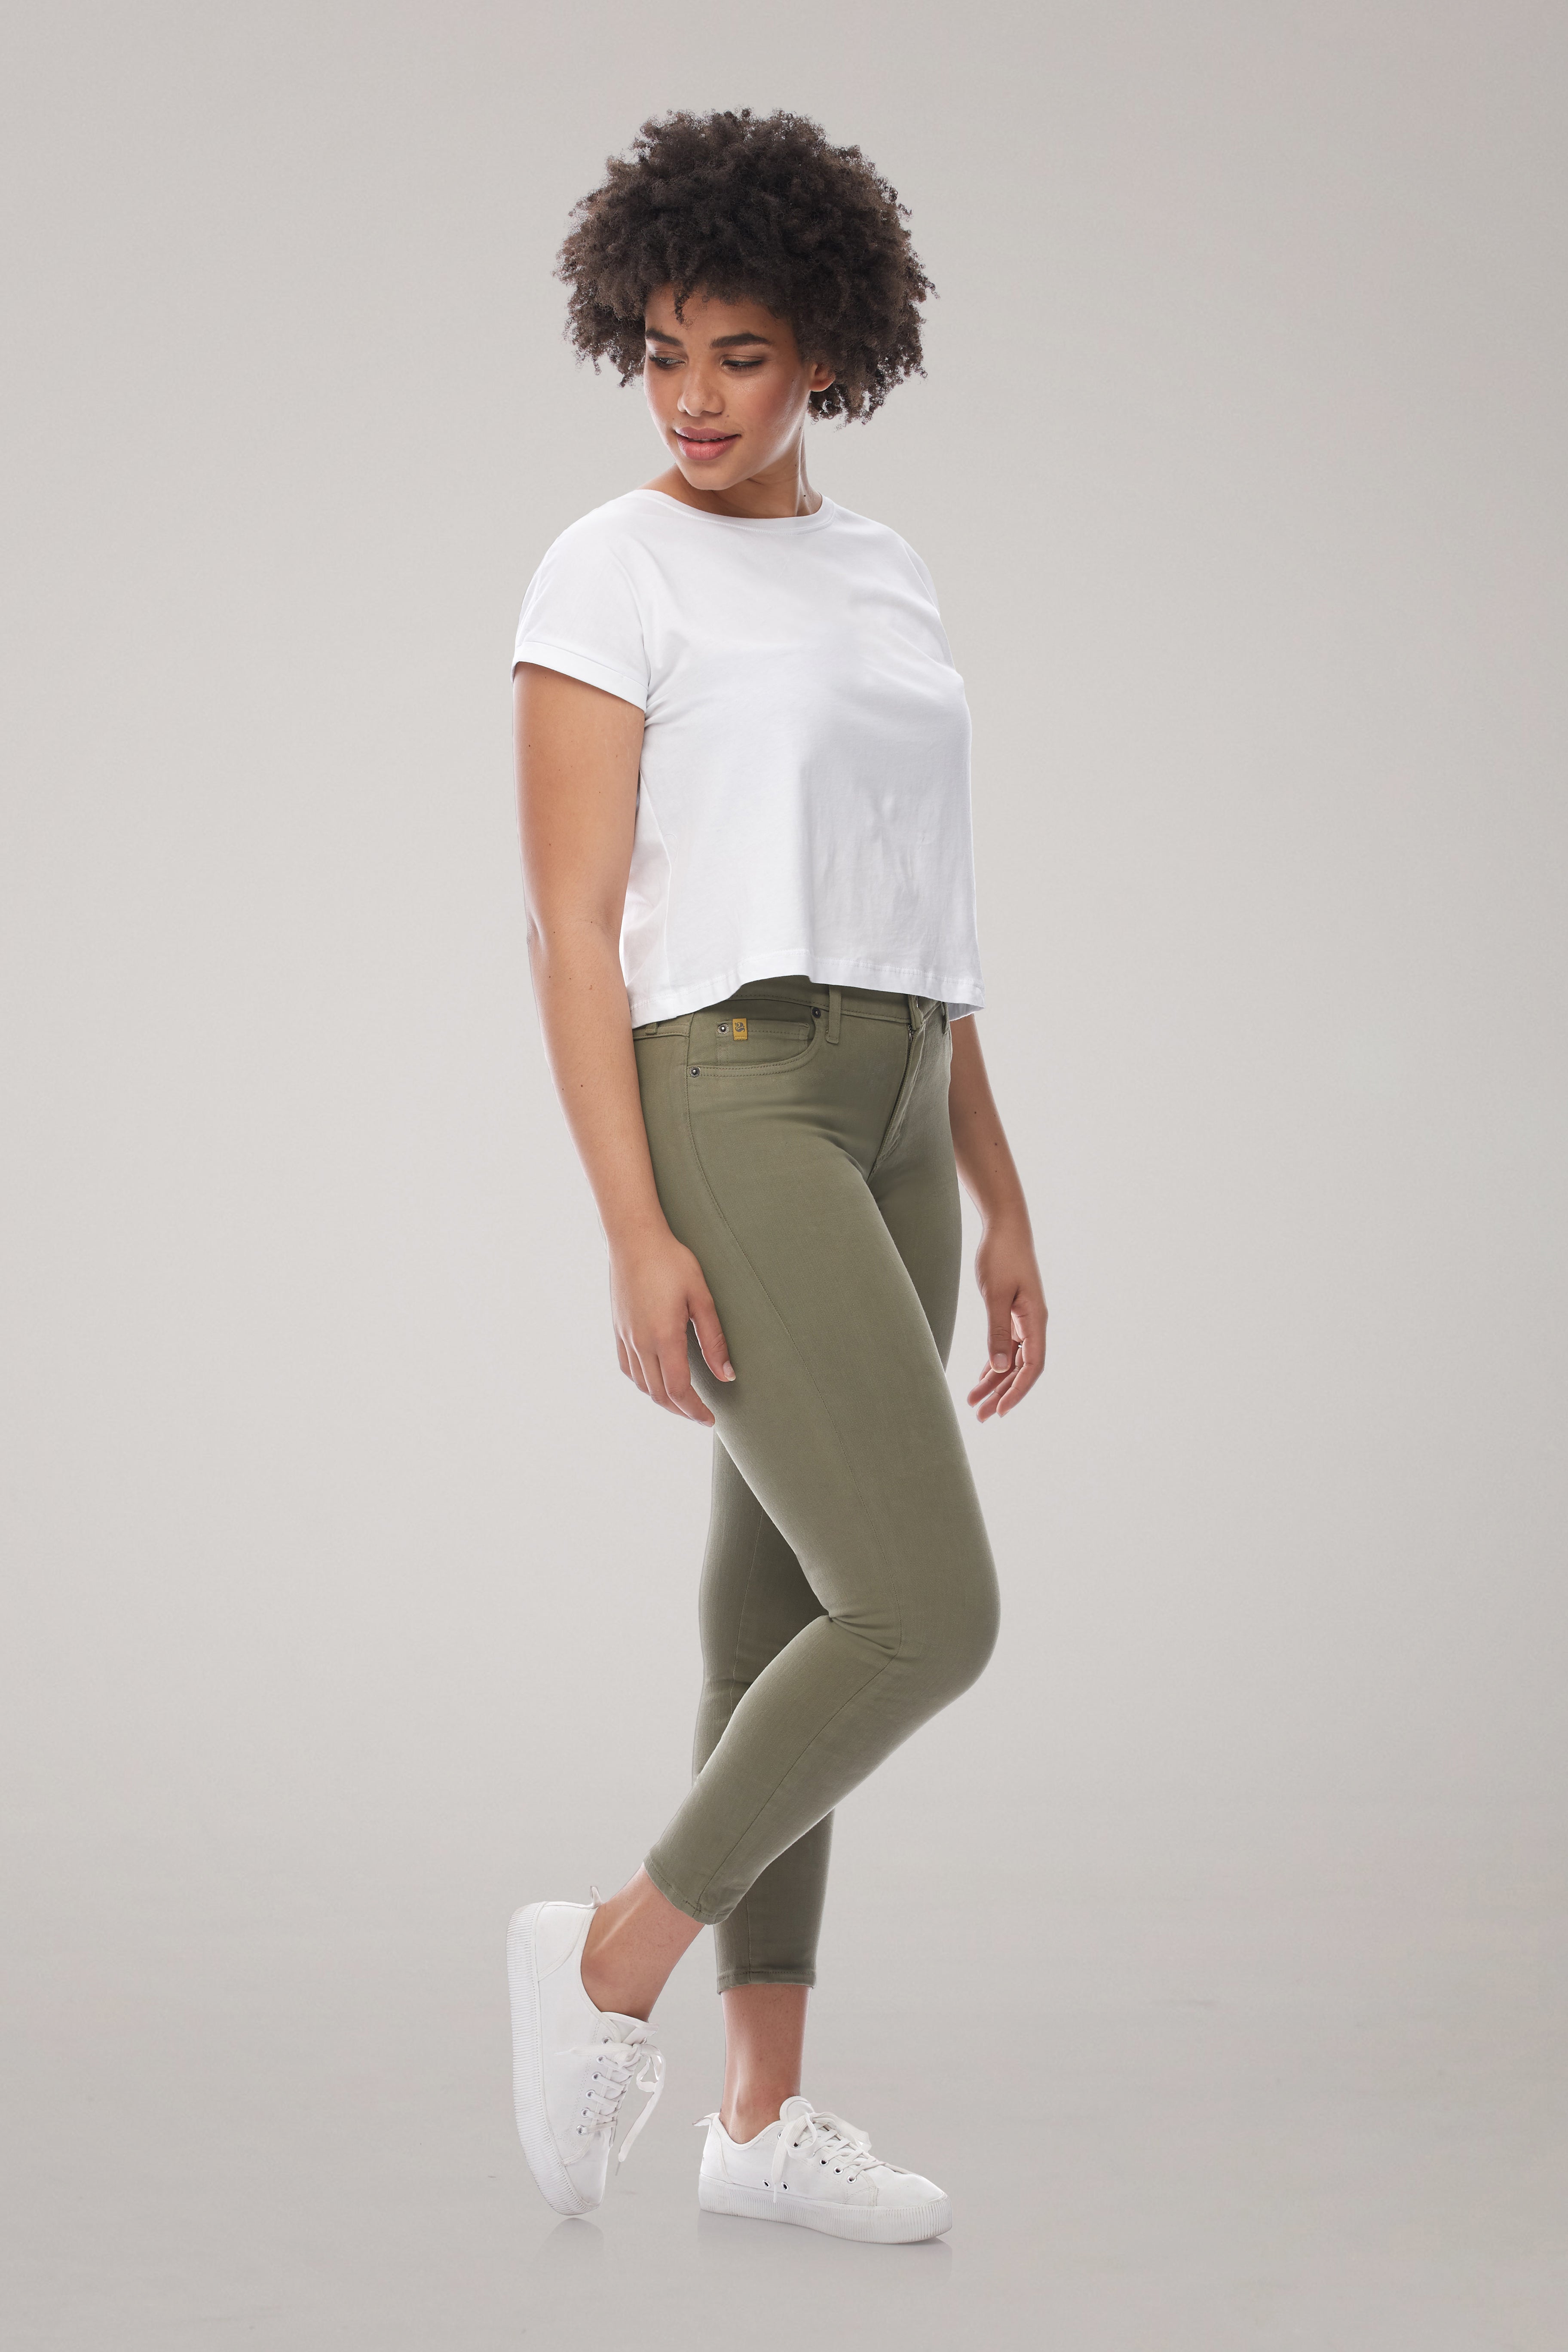 Rachel Classic Rise Skinny Ankle Yoga Jean, Desert Road, 27 inch inseam, sizes 24-34, made in Canada